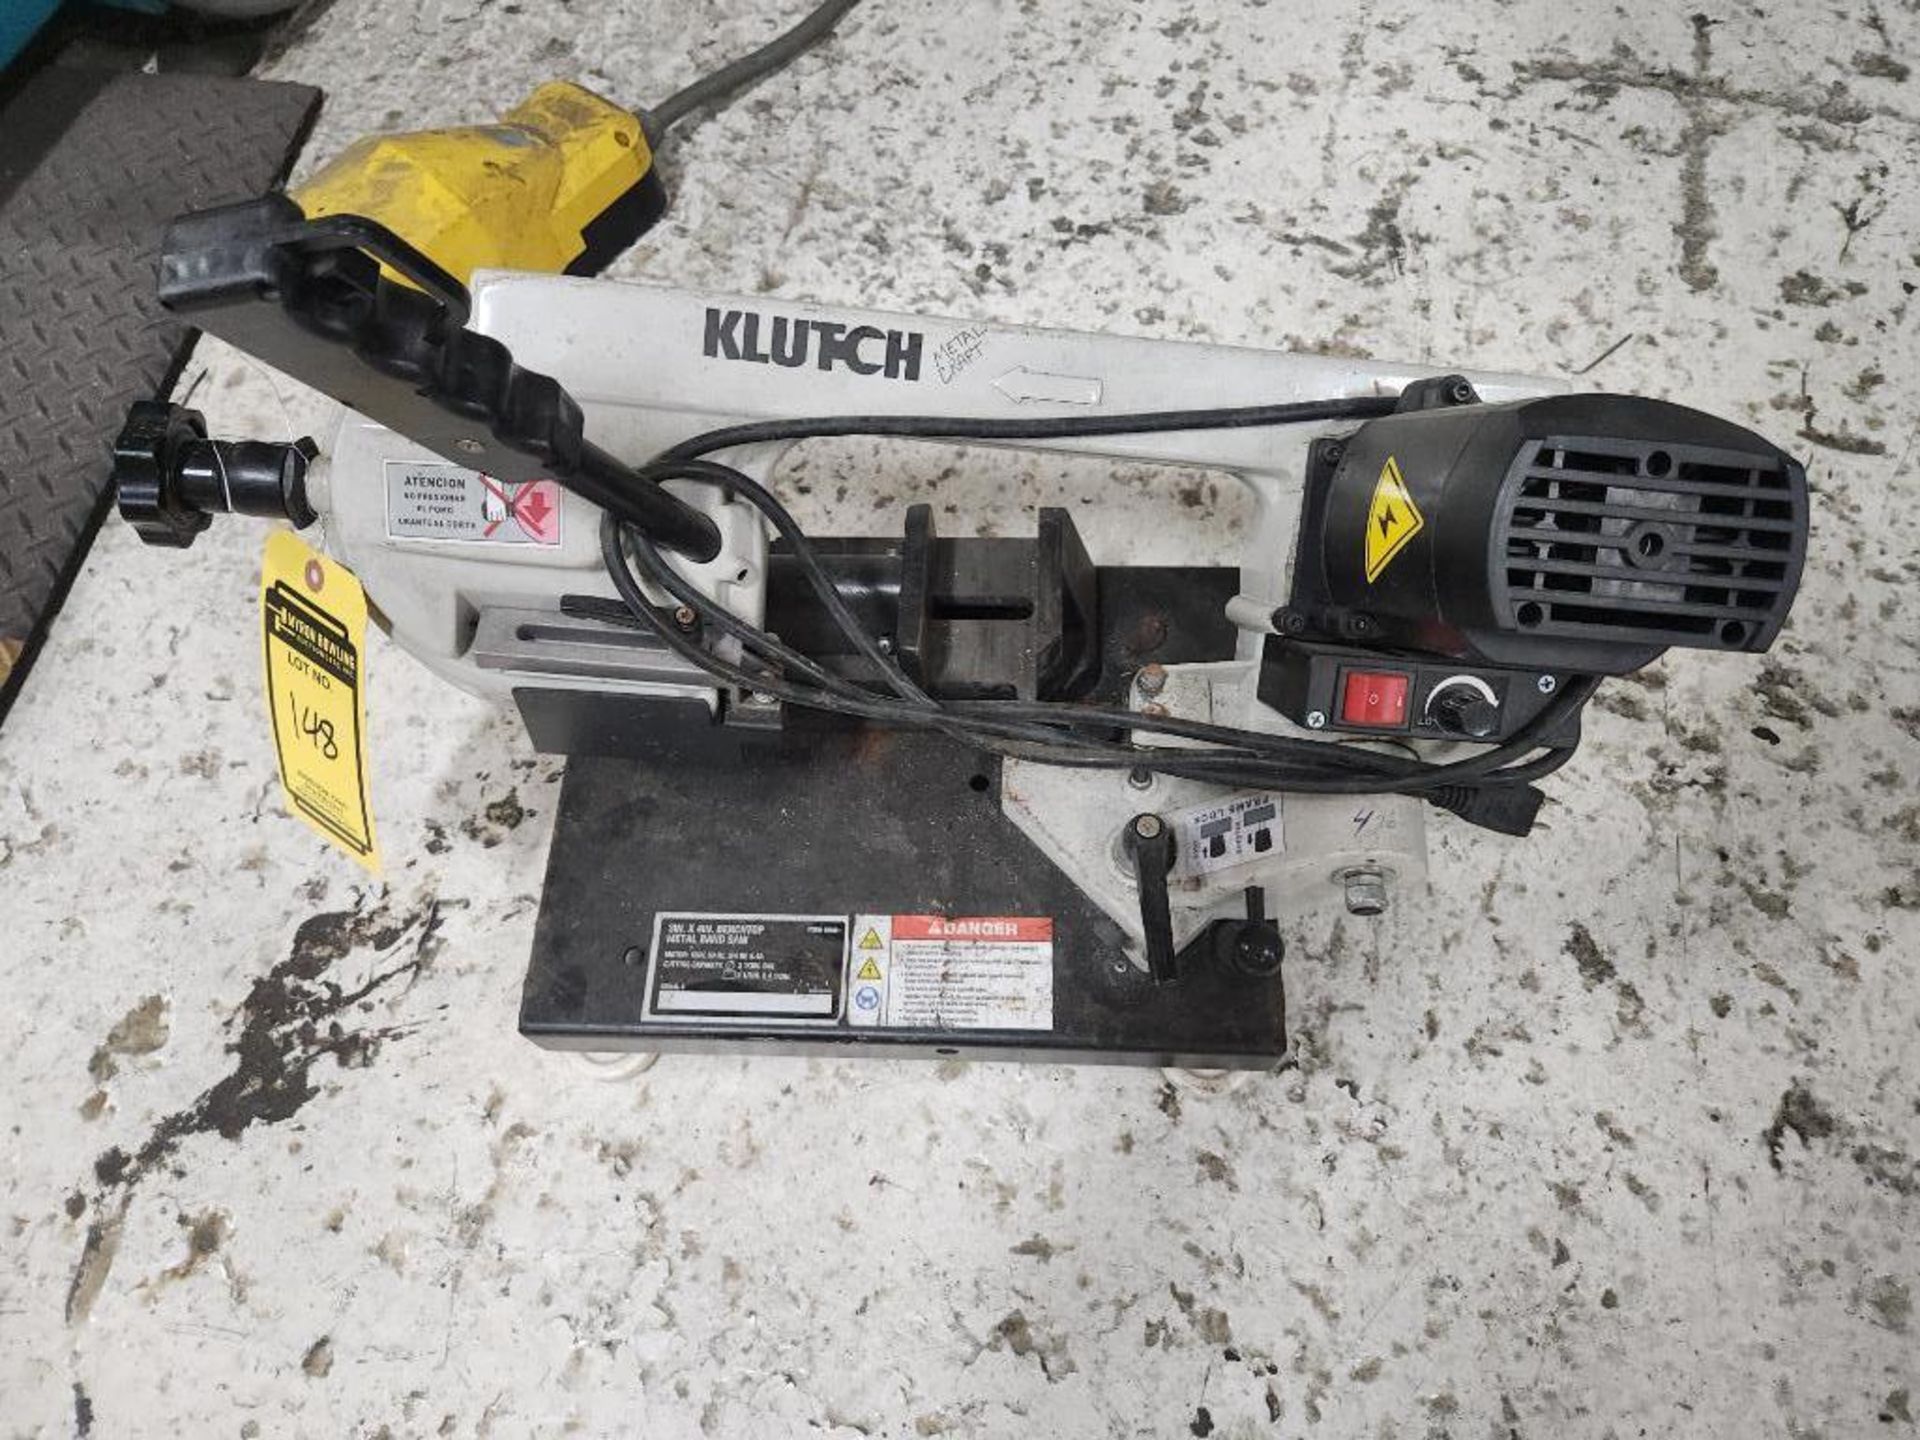 Klutch Bench Top Band Saw, 52" Blade, 3" - 4" Cut Capacity, Model 49466, S/N A17031970